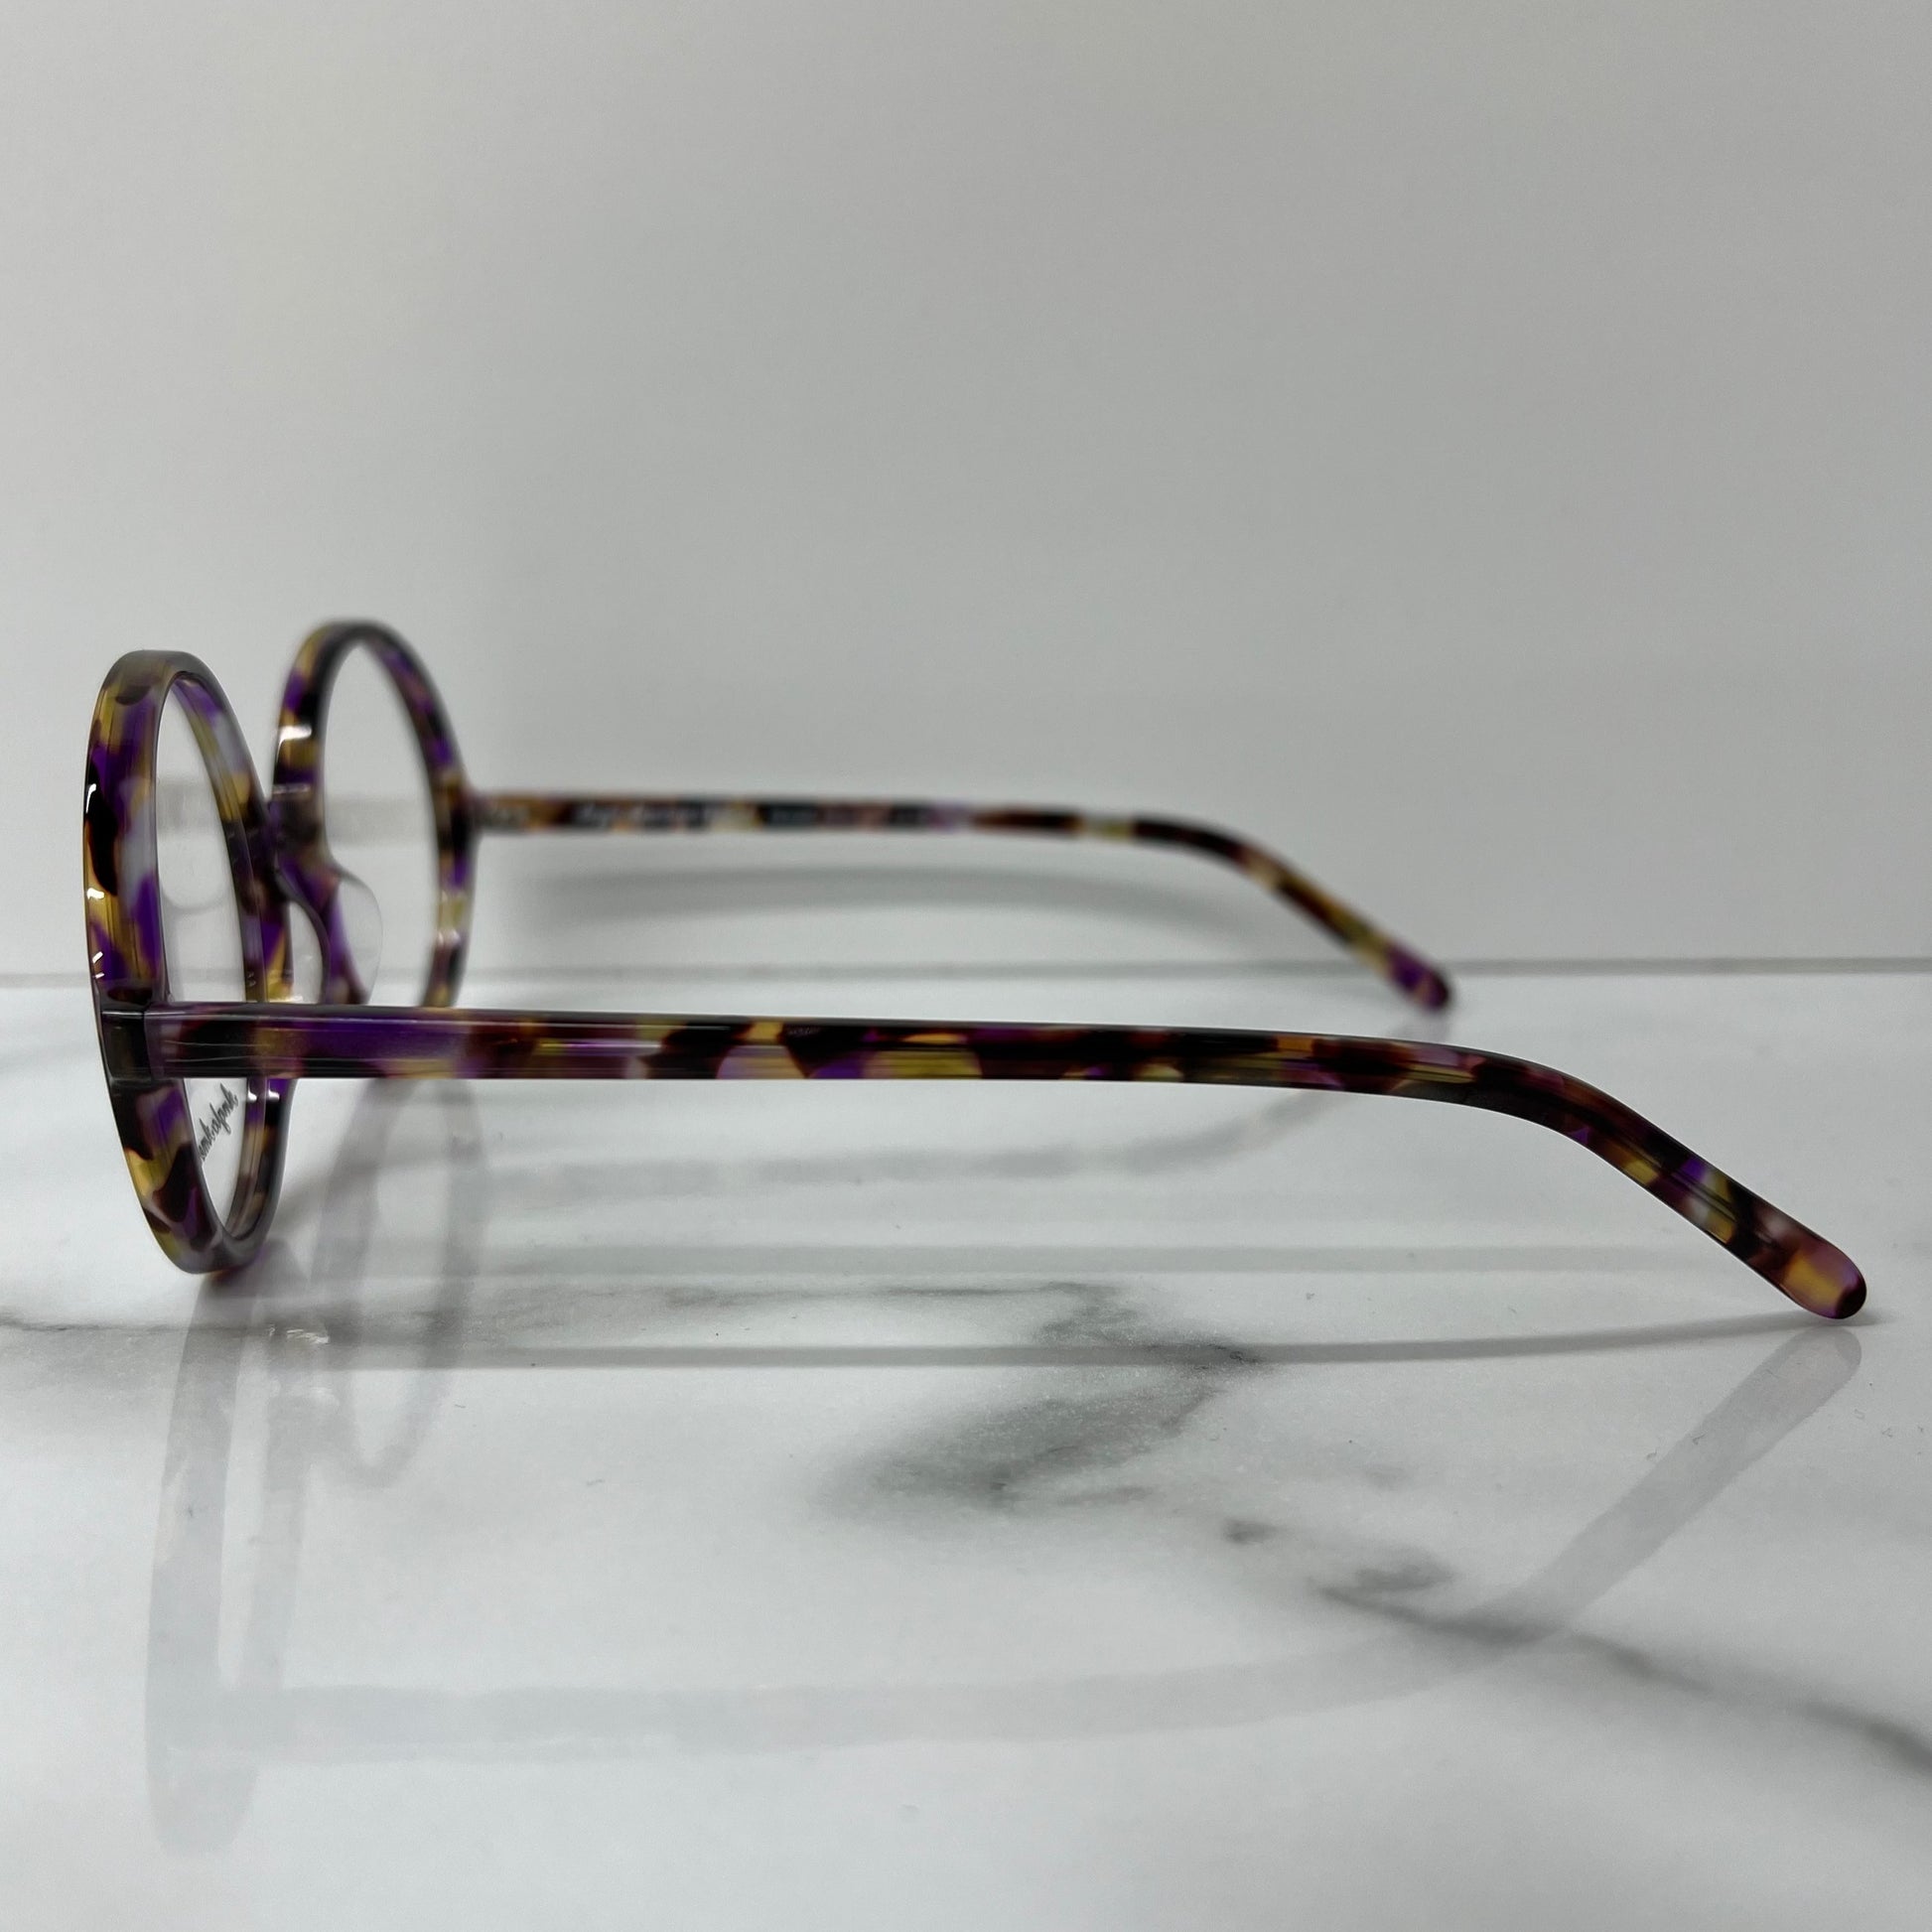 Anglo American 116 Optical Glasses Multicoloured Round Vintage Eyeglasses Frame